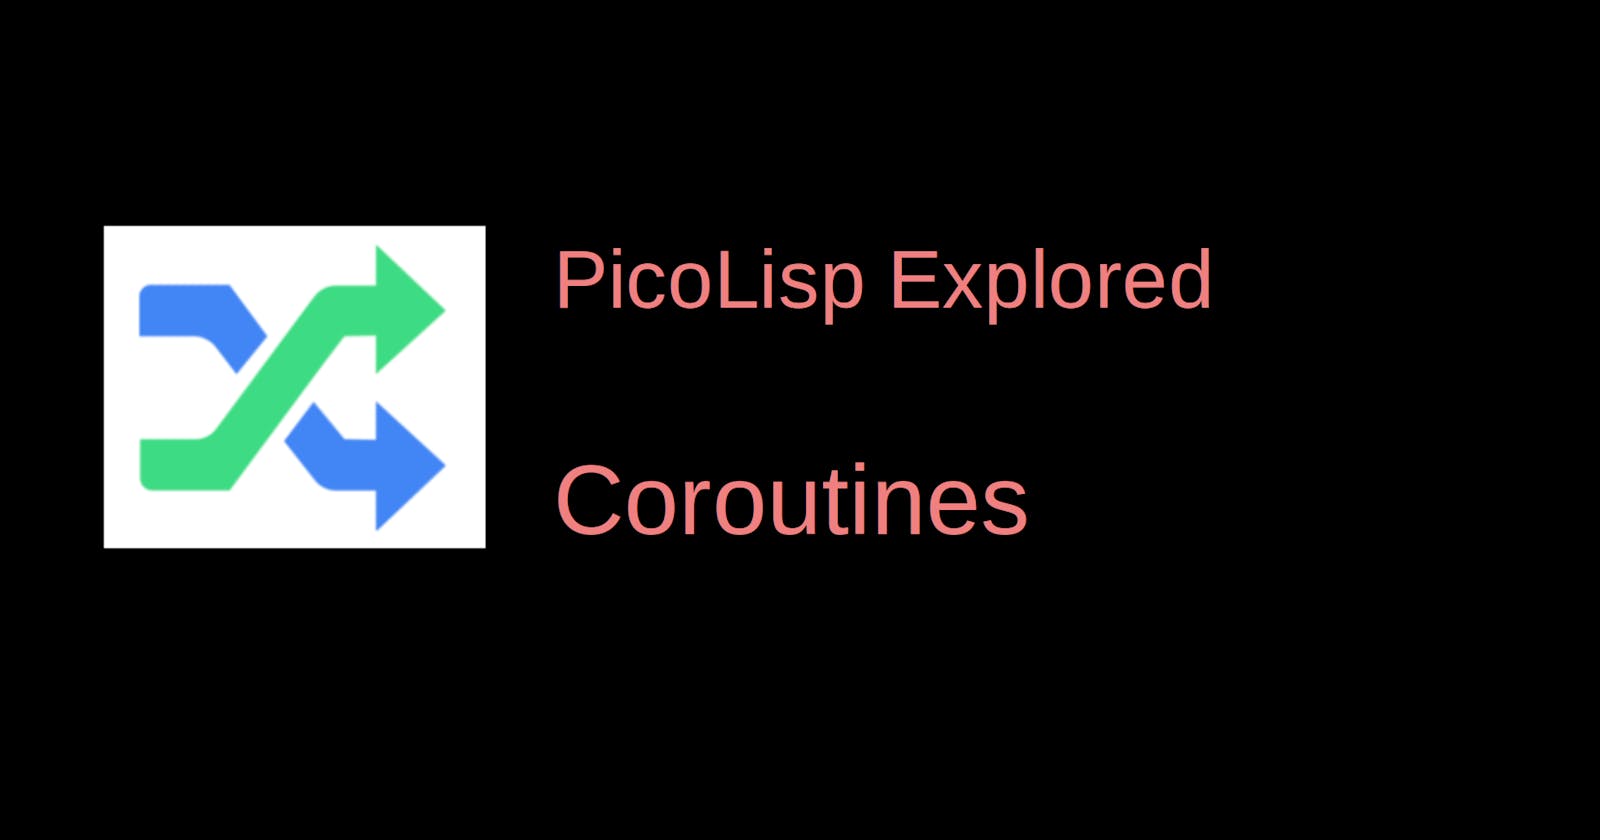 PicoLixp Explored: On Coroutines